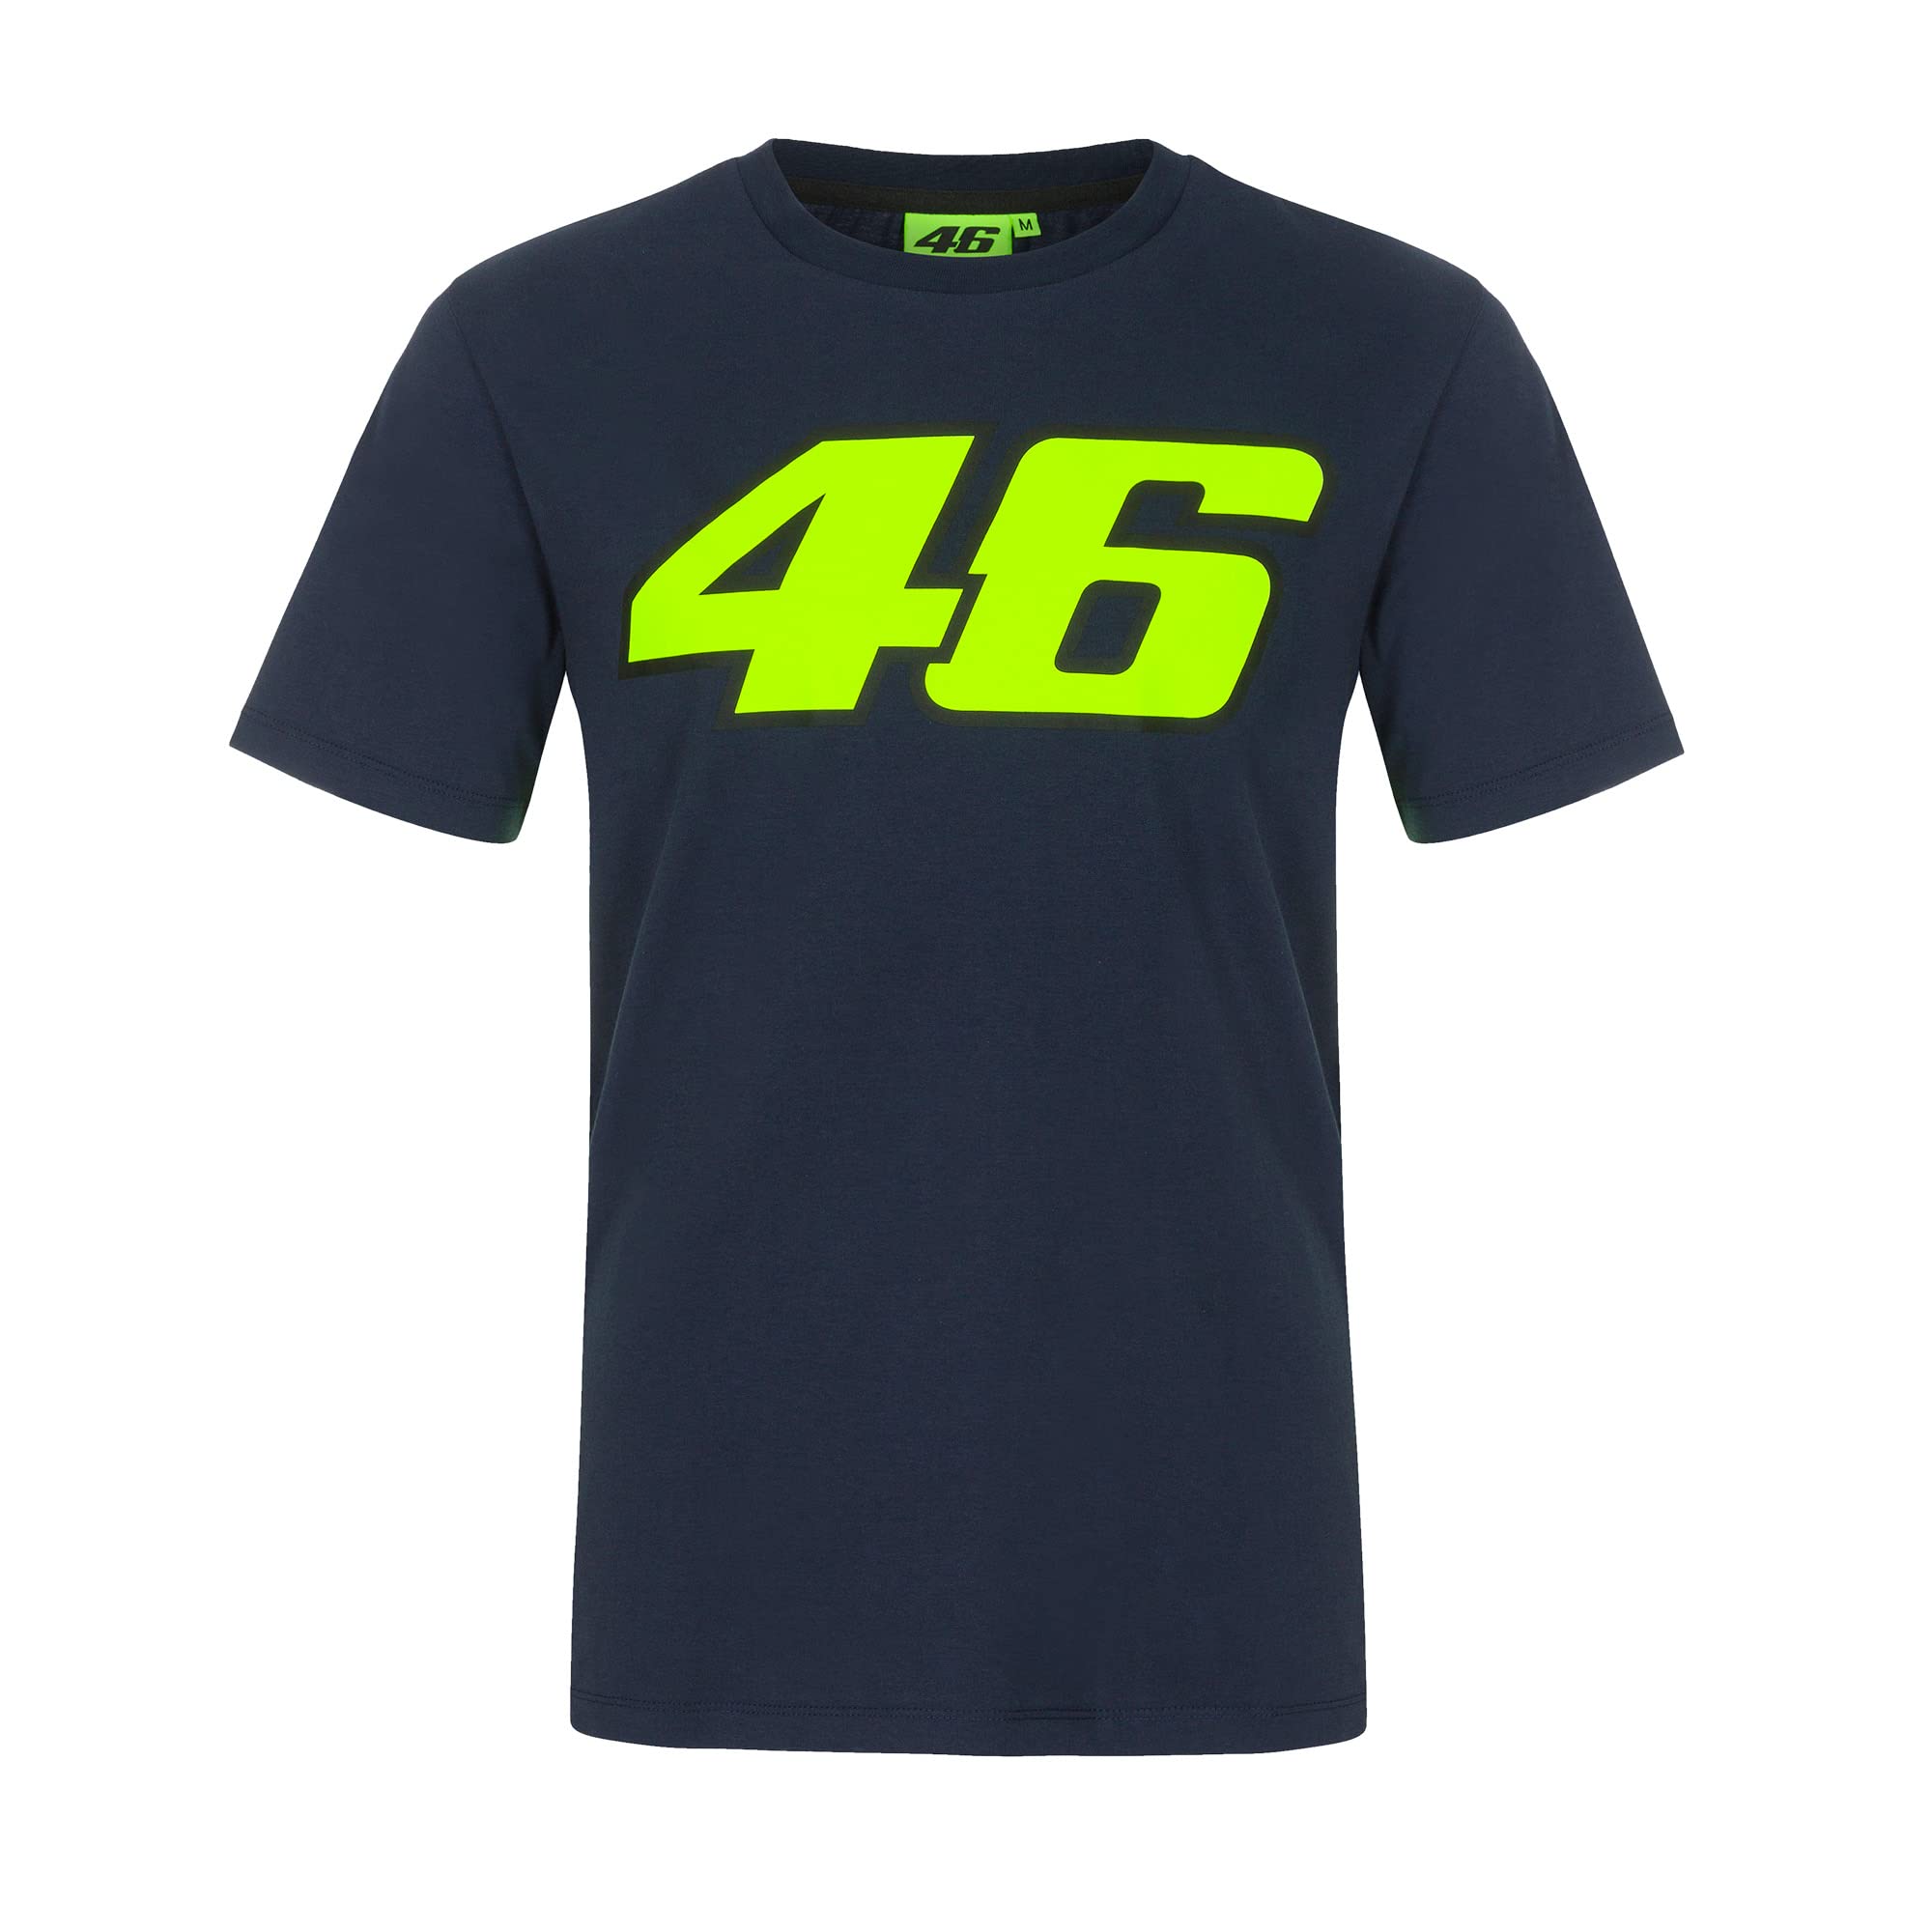 luxe  VR 46 Men´s 46 The Doctor T-Shirt (Pack of 1) MpOOTXmkV en vente